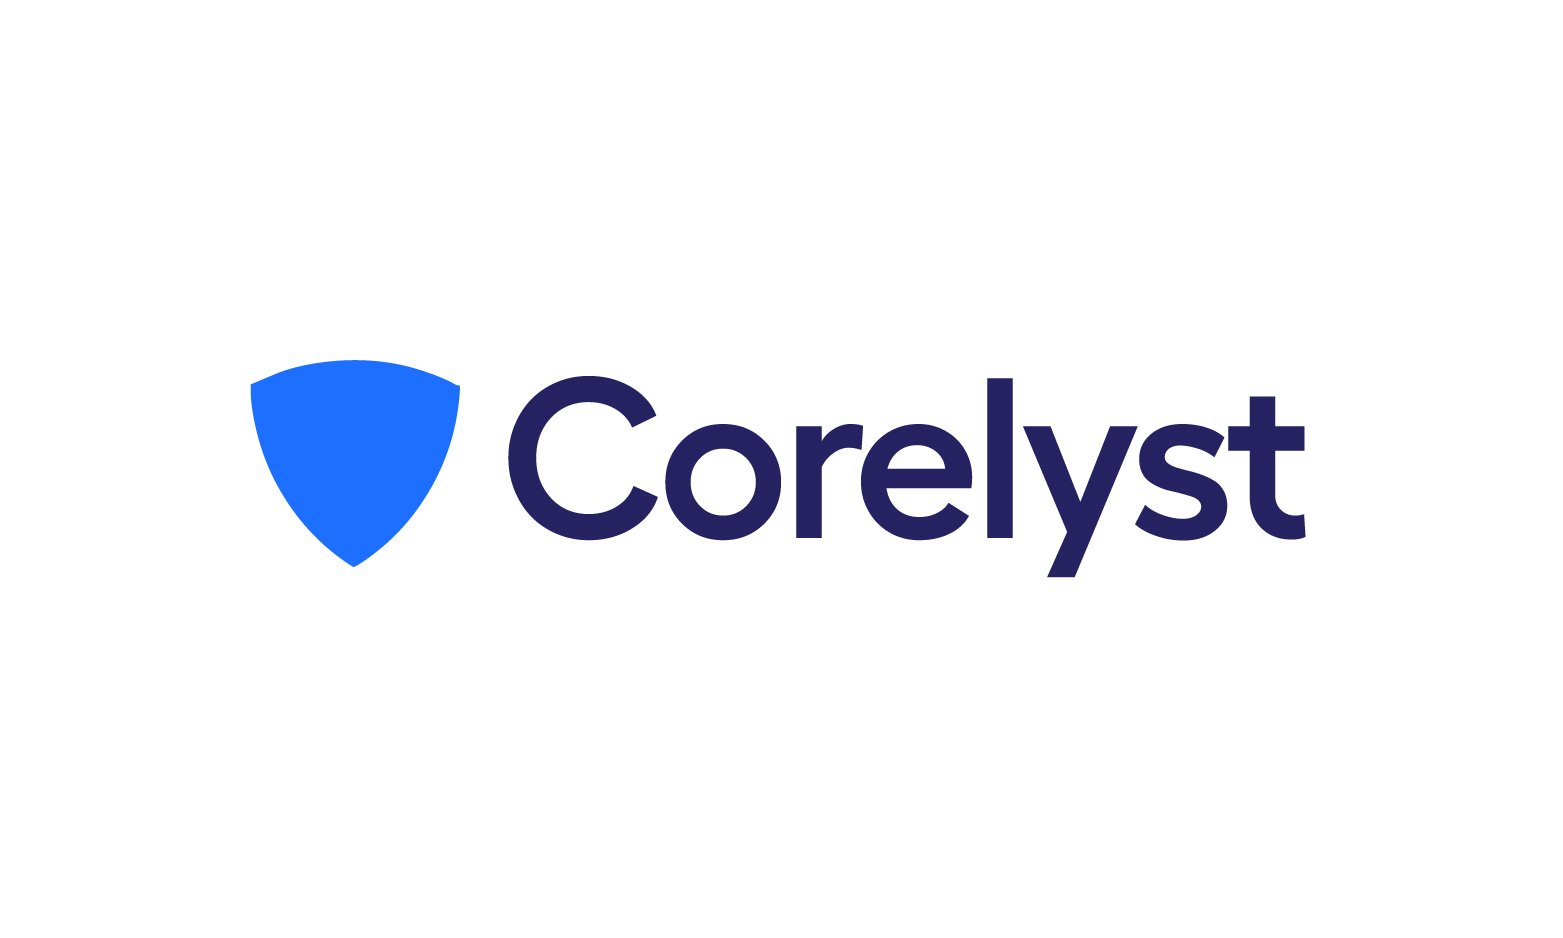 Corelyst.com - Creative brandable domain for sale